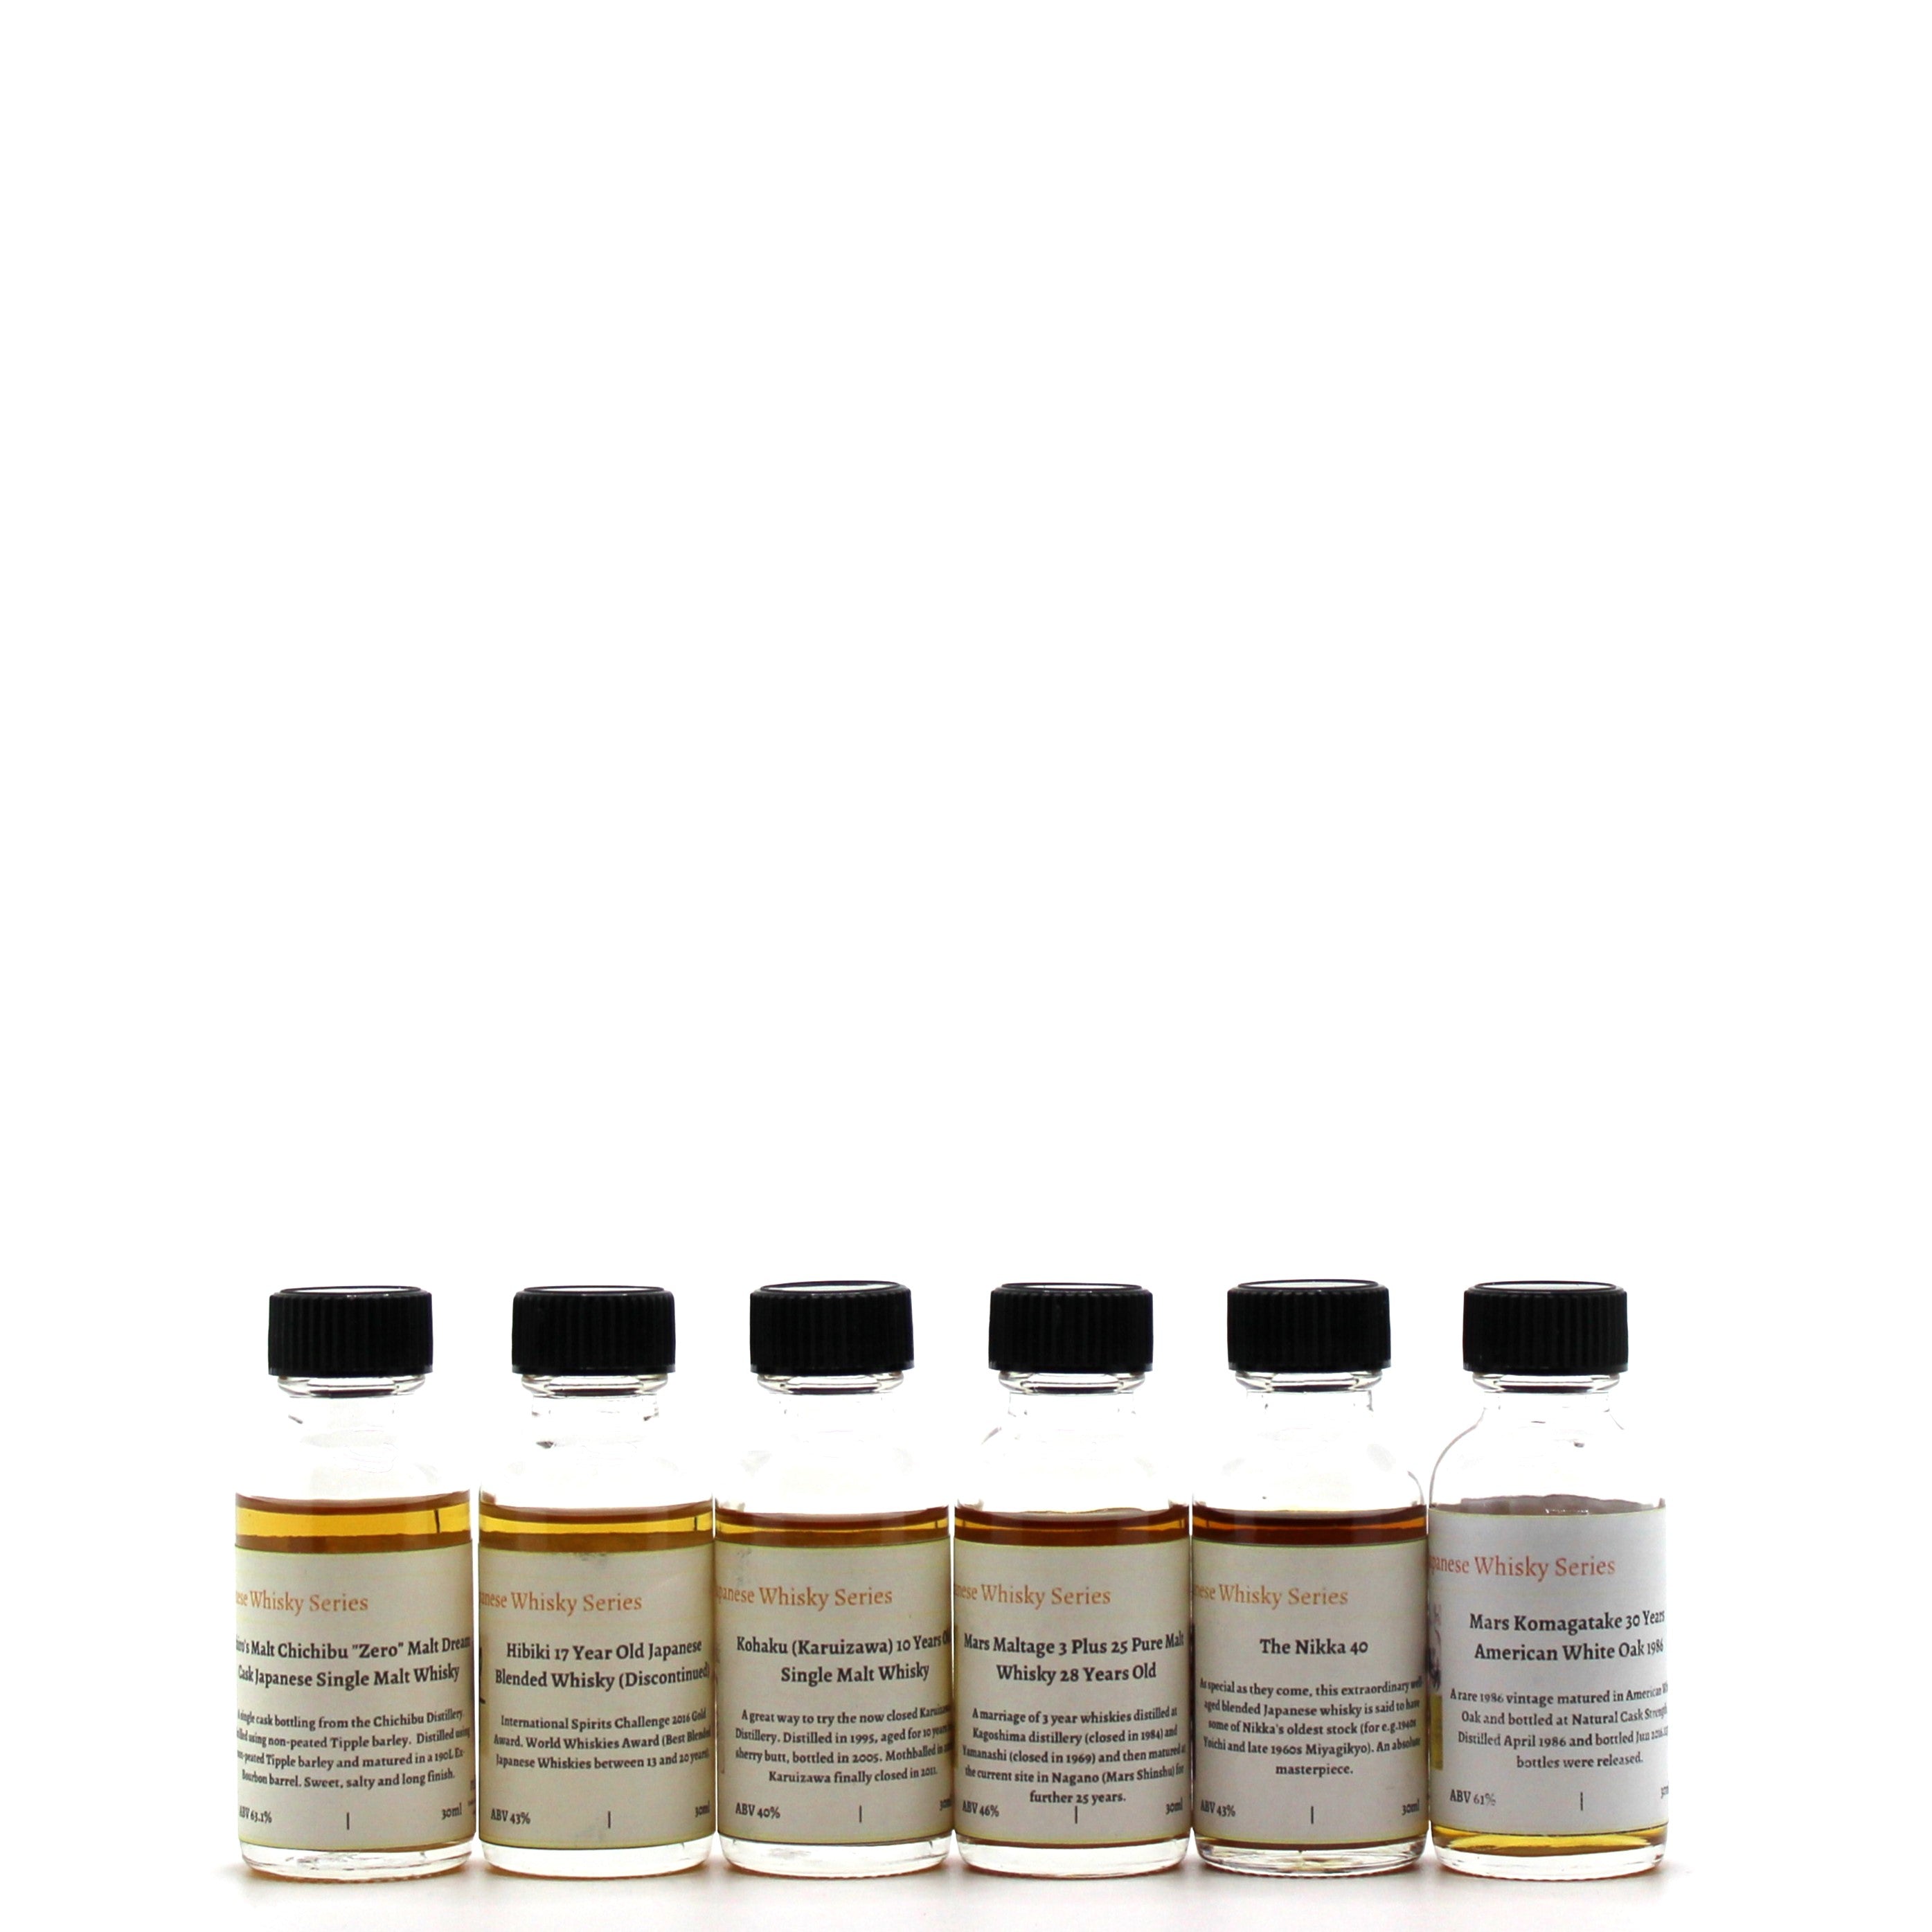 B. Fine &amp; Rare Japanese Single Malt Whisky (6 x 30 ml) Tasting Set with Gift Box